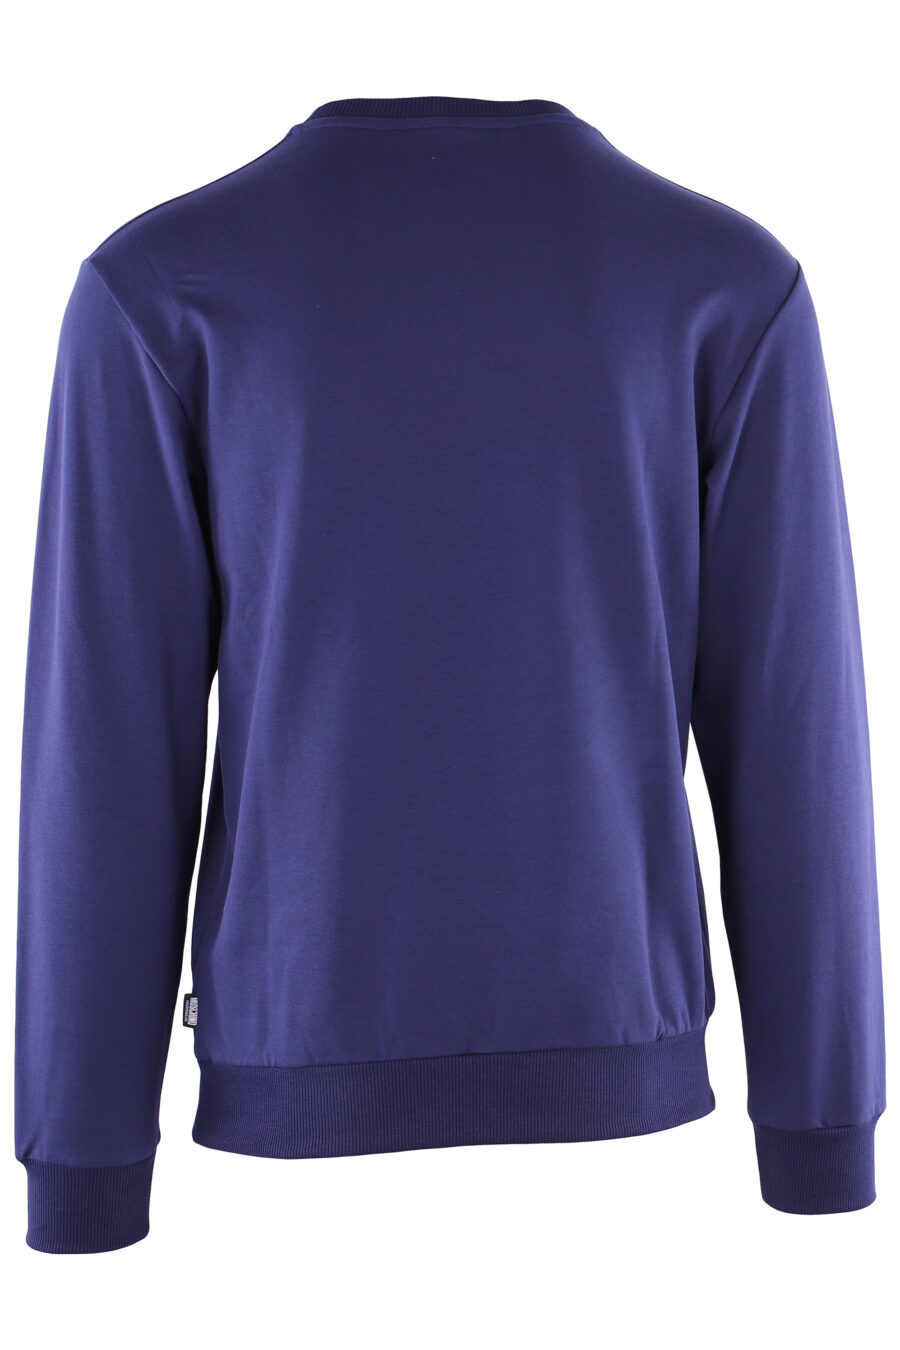 Dark blue sweatshirt with bear logo "underbear" - IMG 6359